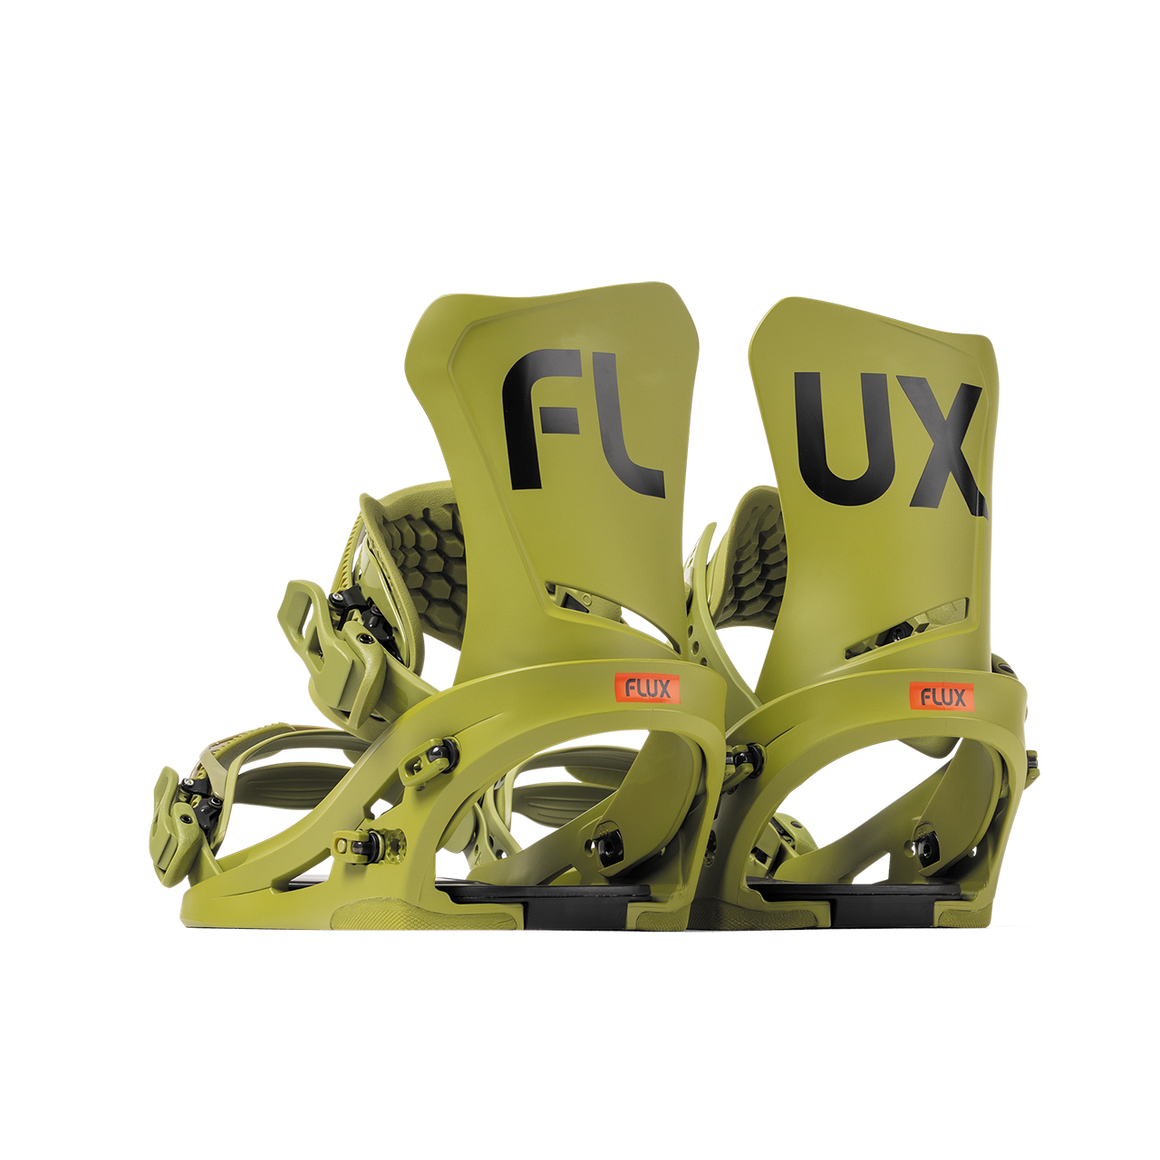 FLUX DS Mサイズスノーボード